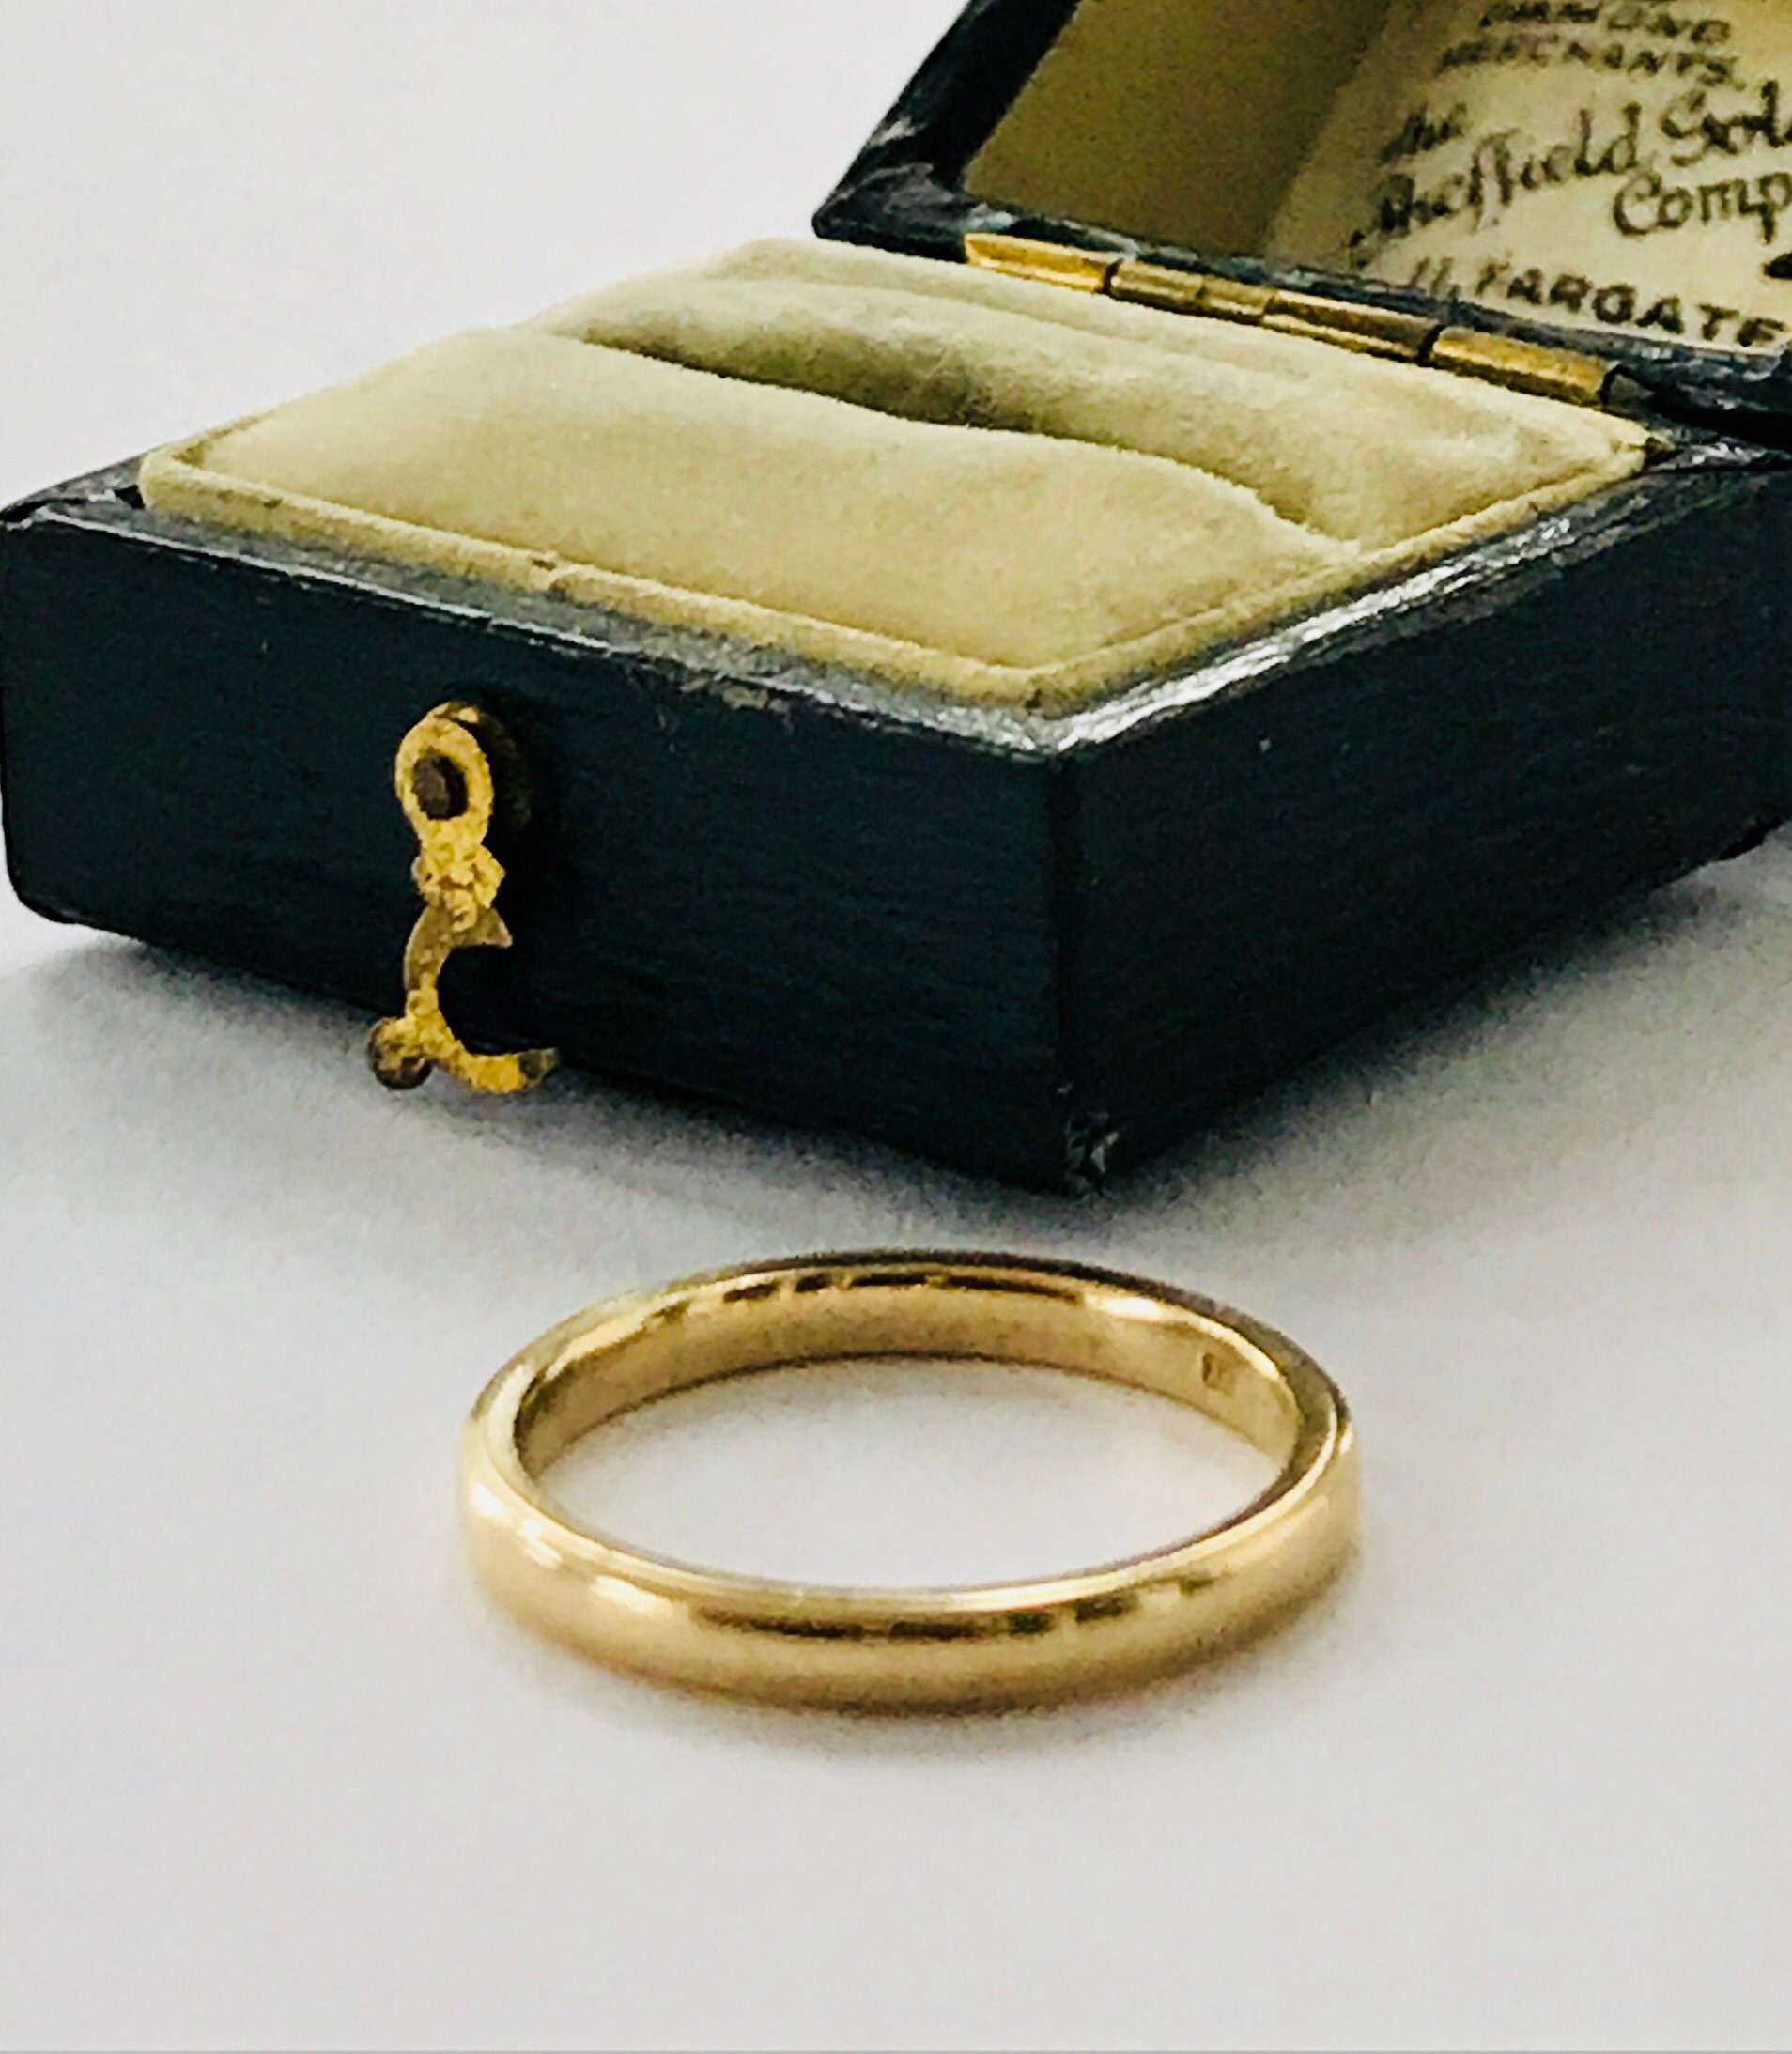 Stunning vintage 9ct yellow gold wedding ring - hallmarked Birmingham 1945